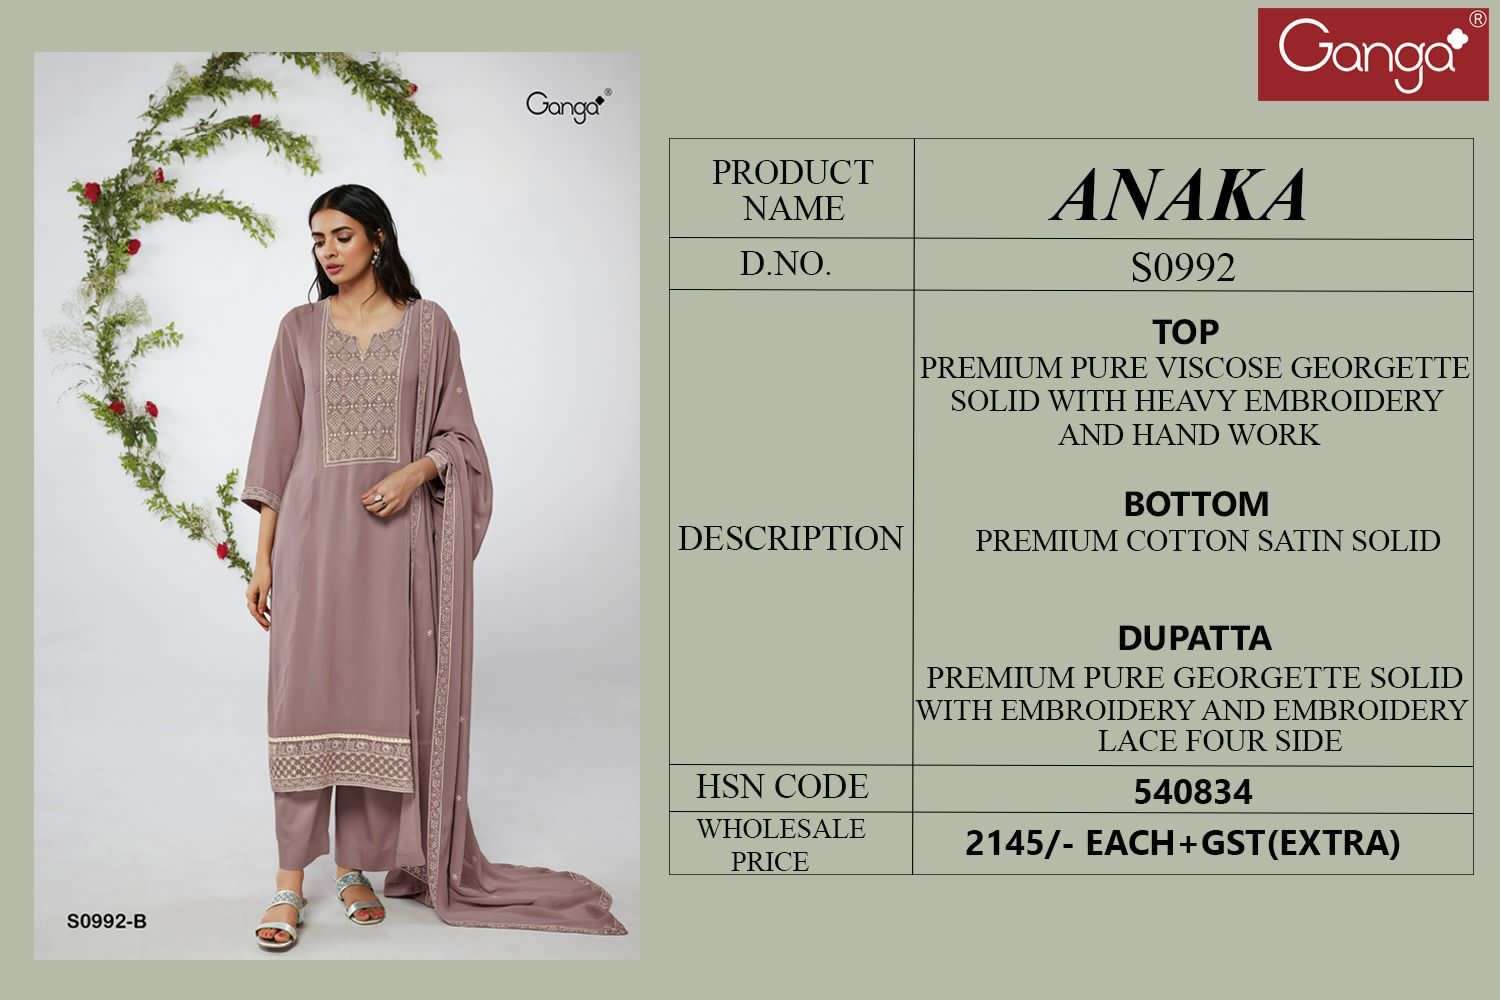 ganga anaka 0992 series trendy designer top botton and dupatta latest catalogue surat 